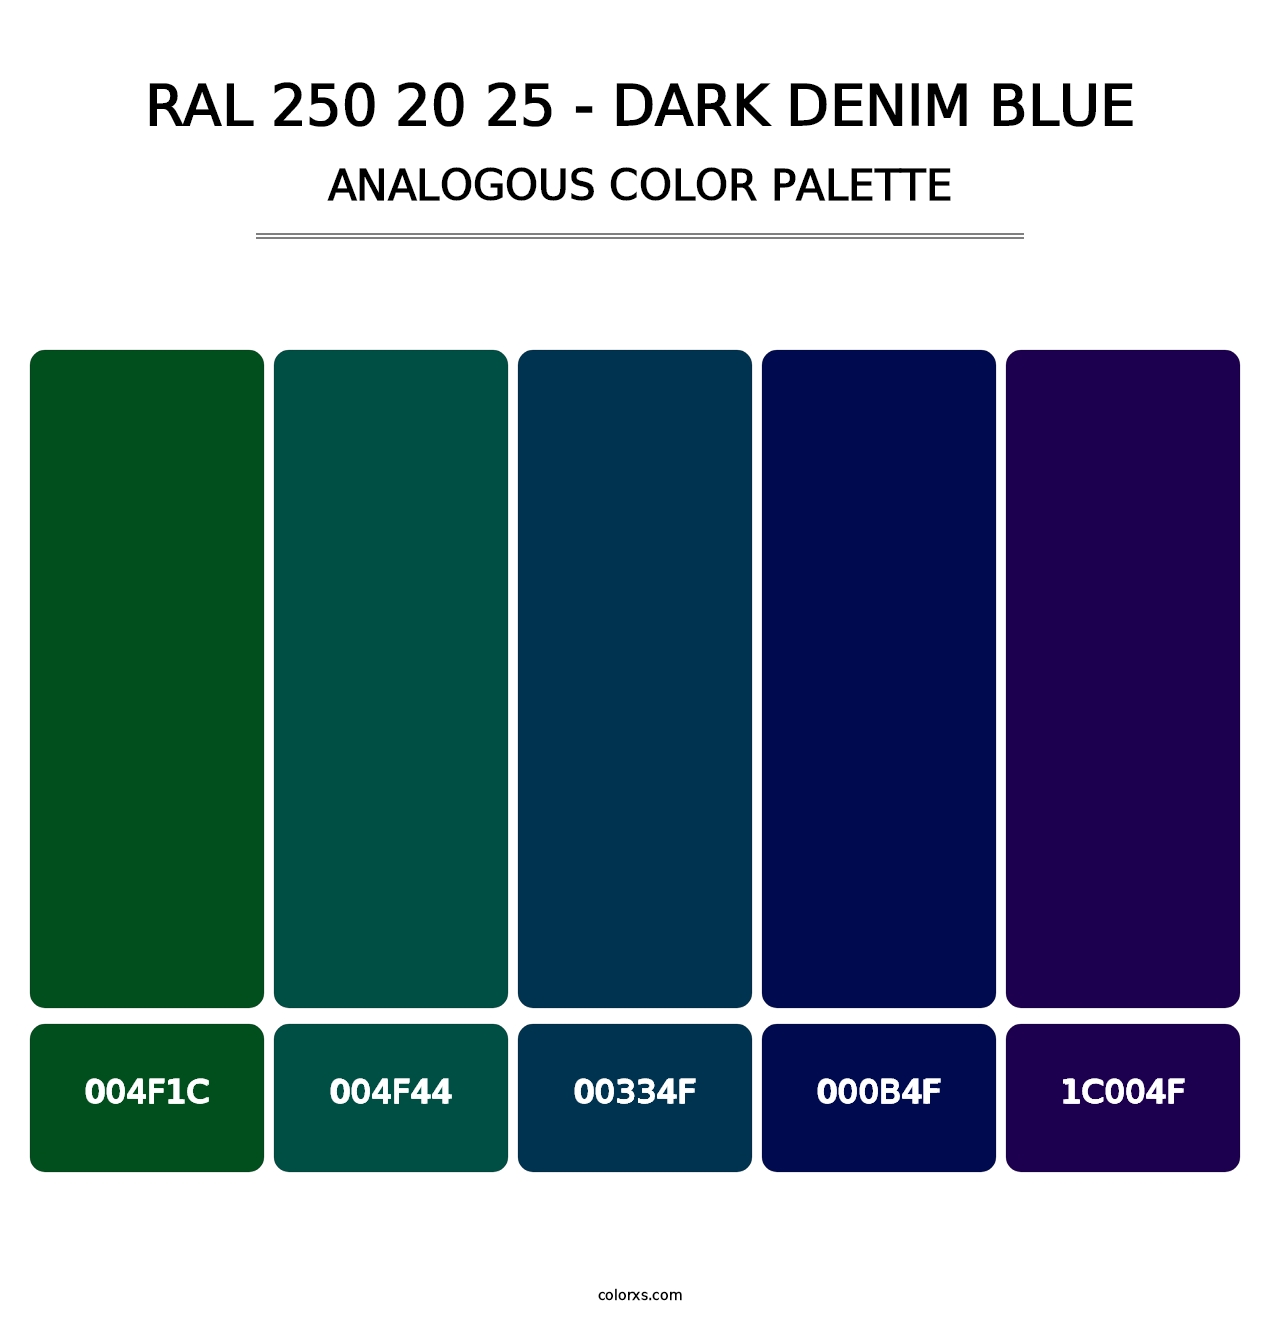 RAL 250 20 25 - Dark Denim Blue - Analogous Color Palette